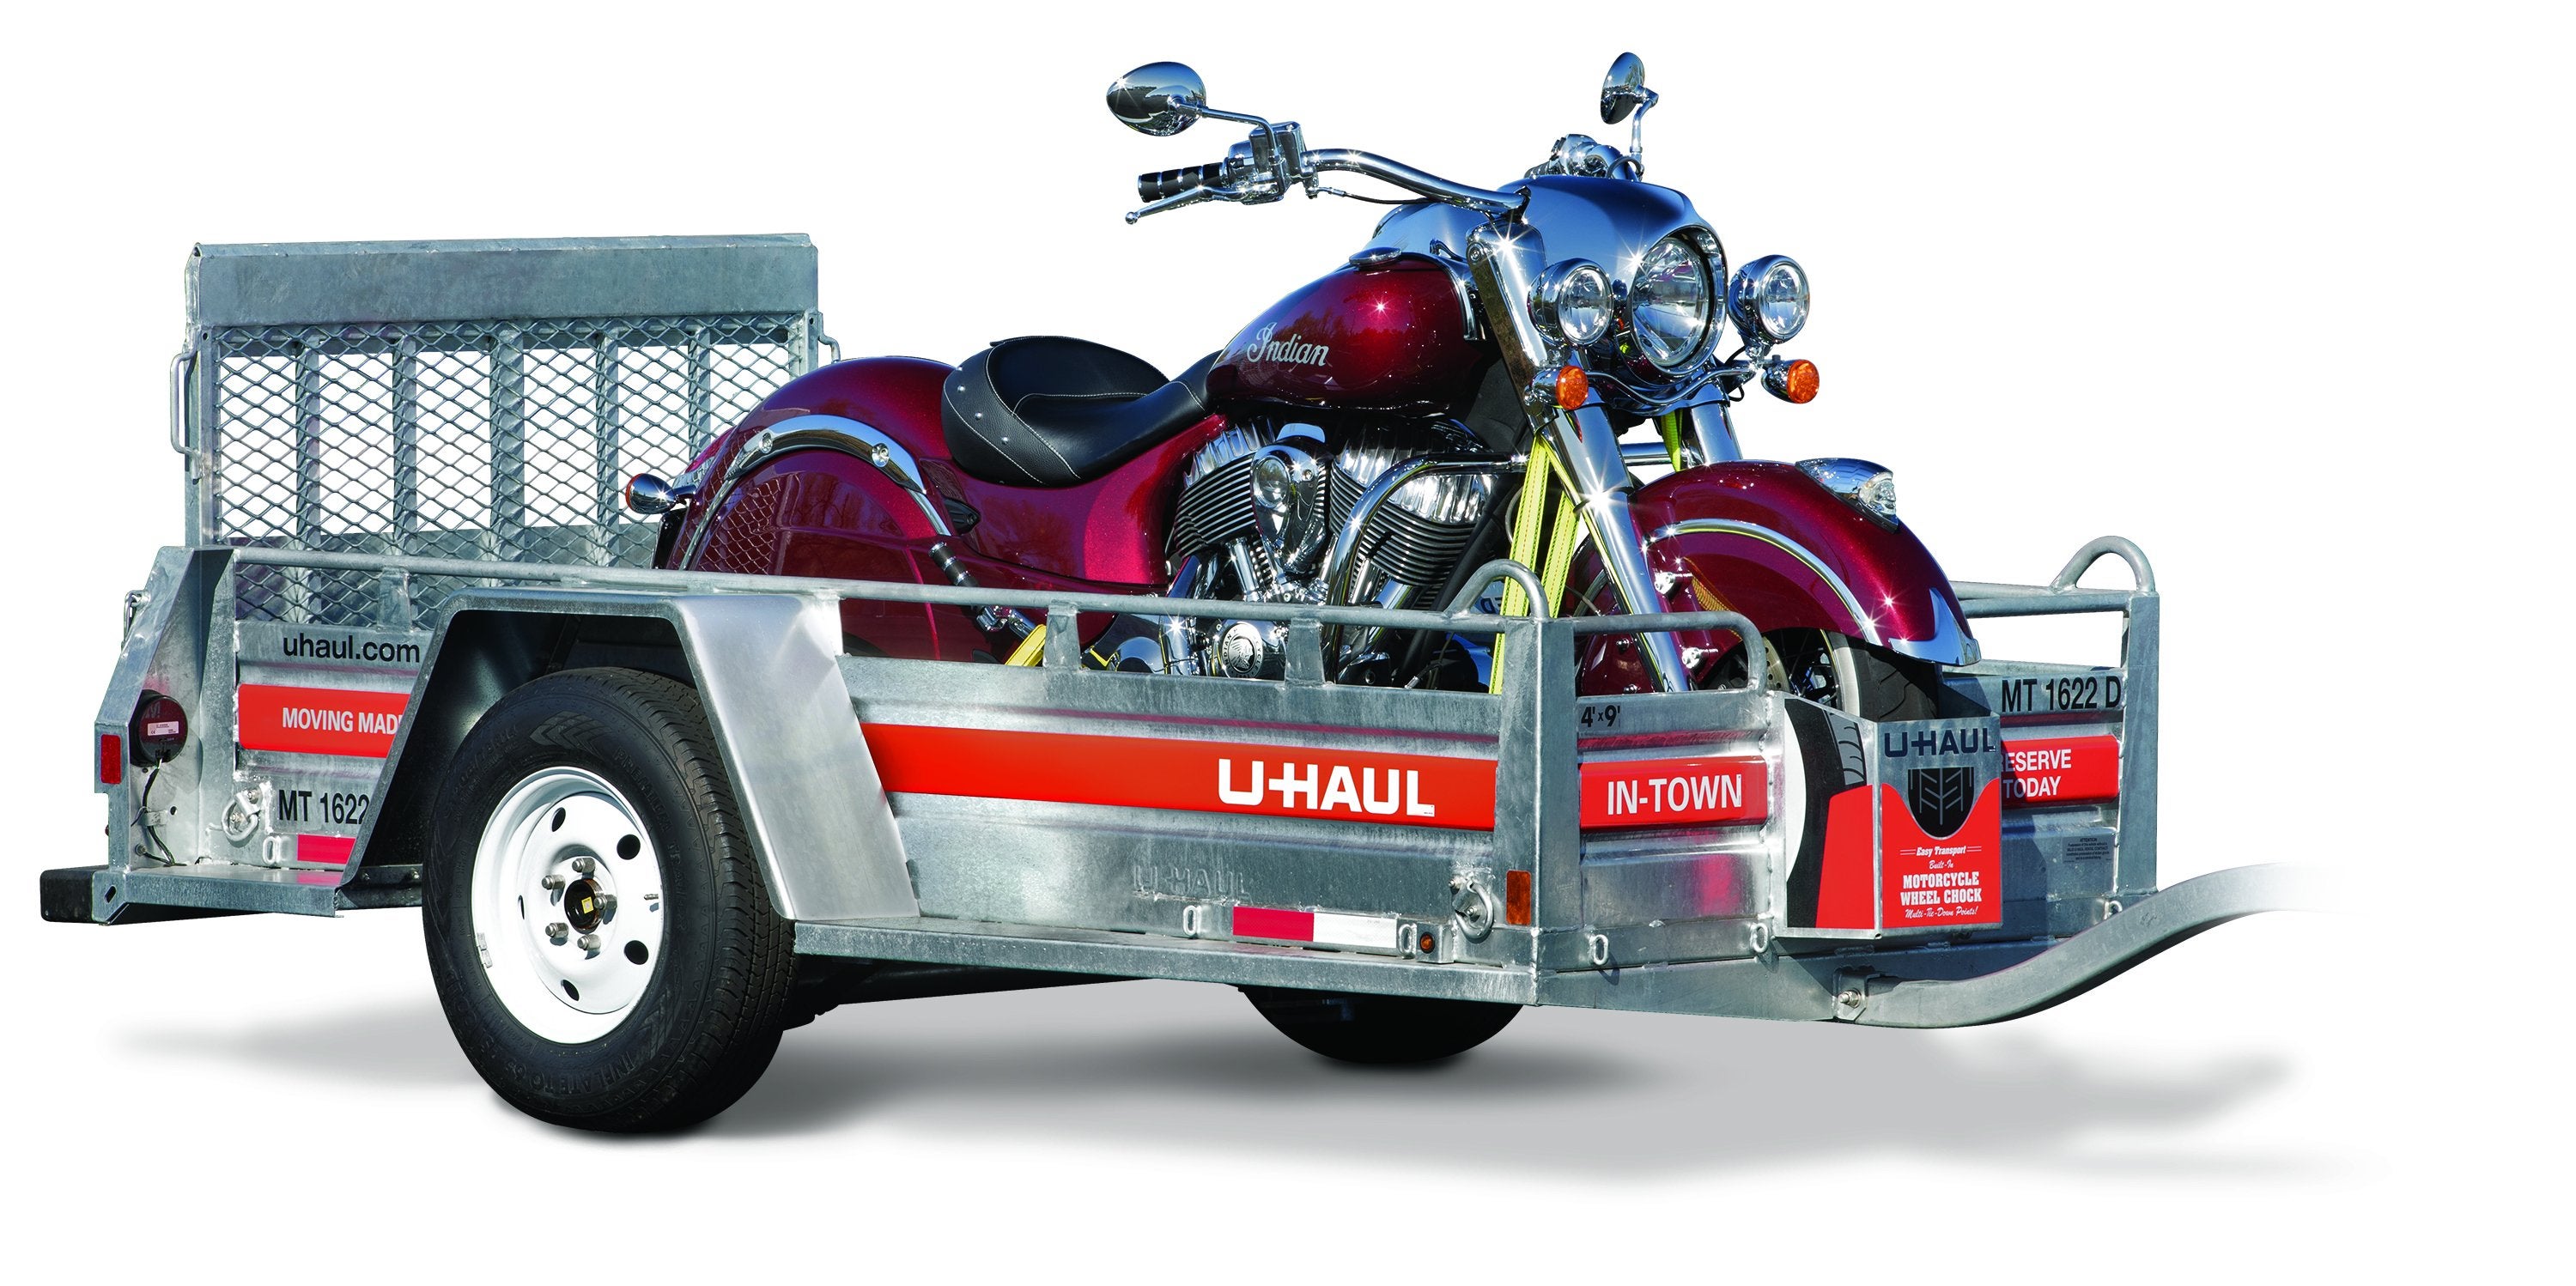 Uhaul motorcycle trailer